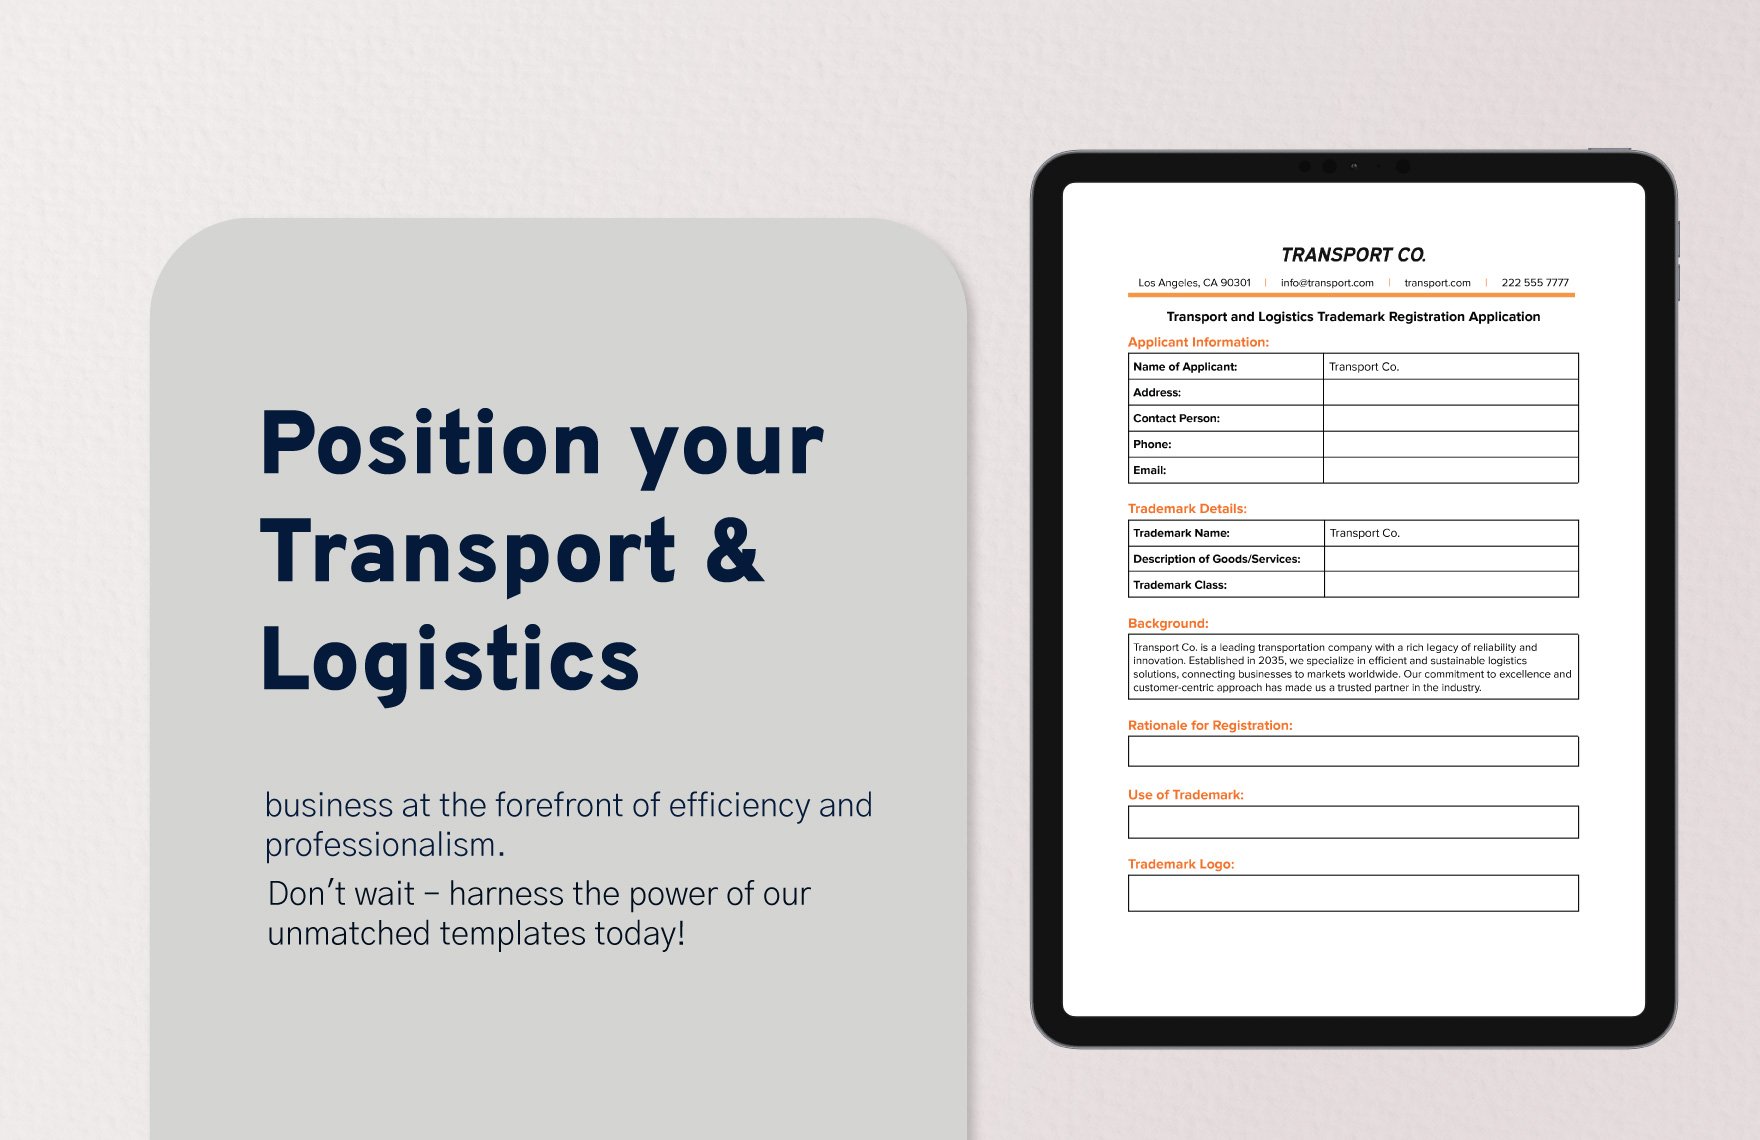 Transport and Logistics Trademark Registration Application Template